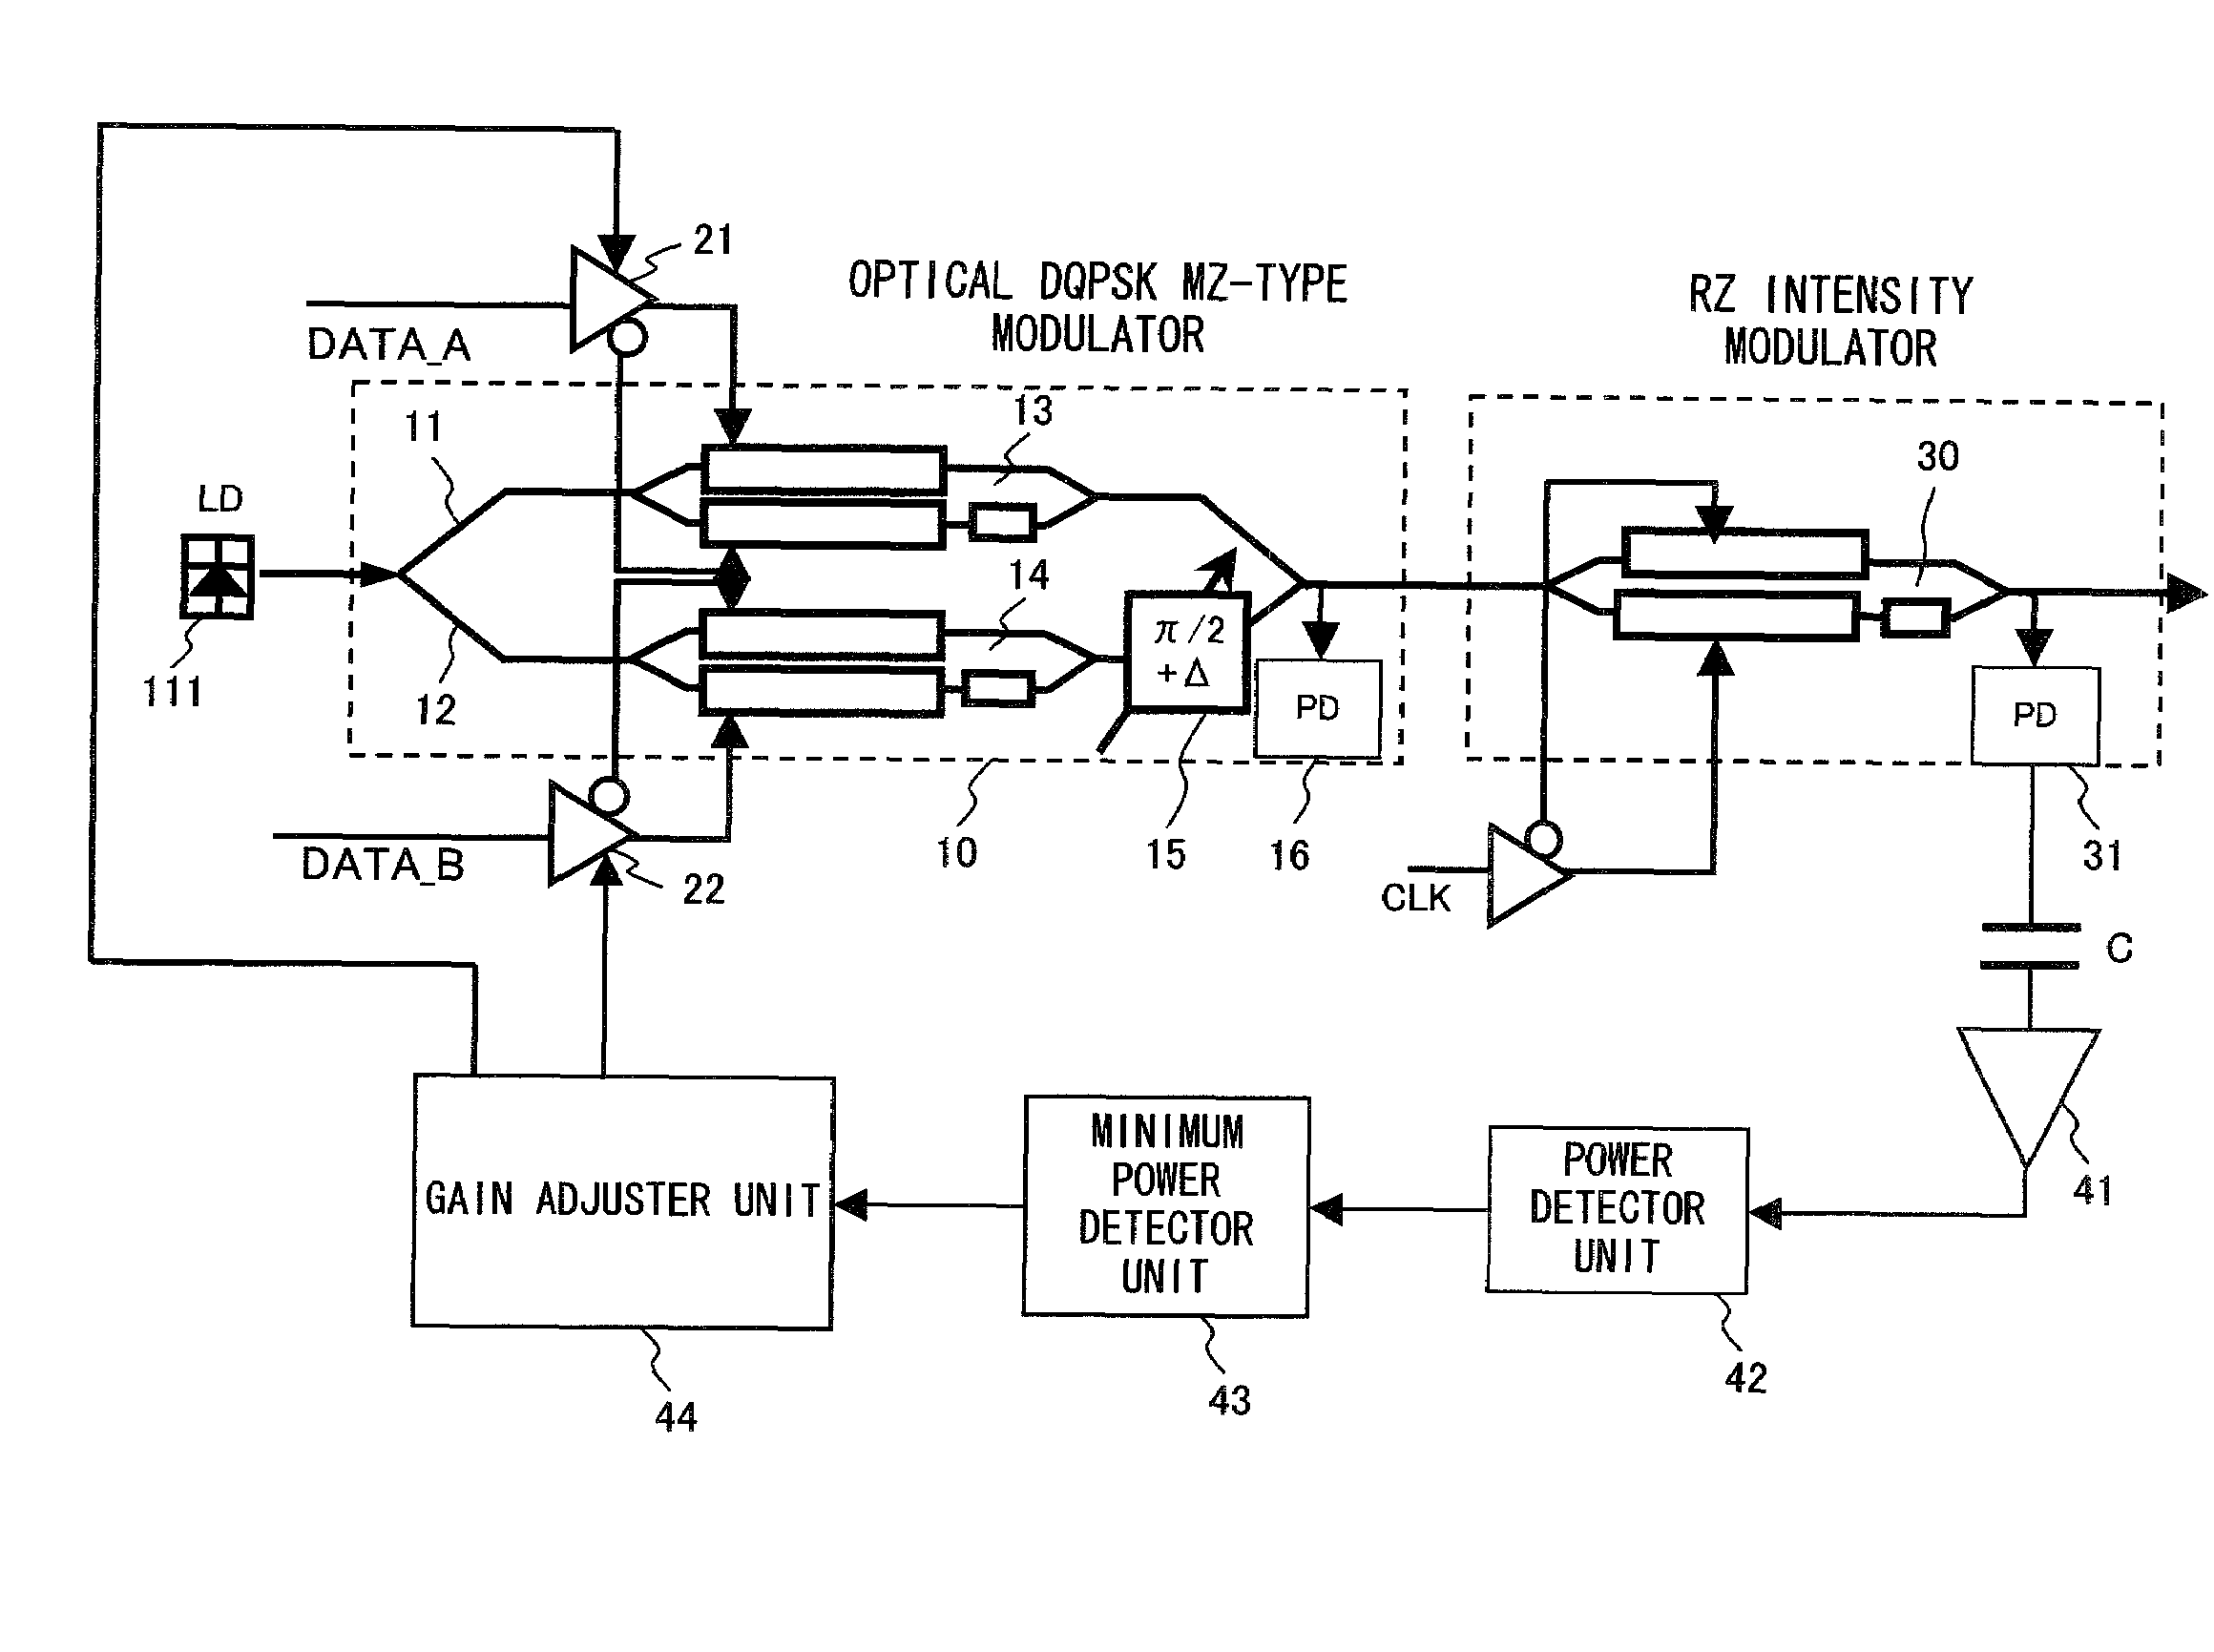 Optical transmitter apparatus